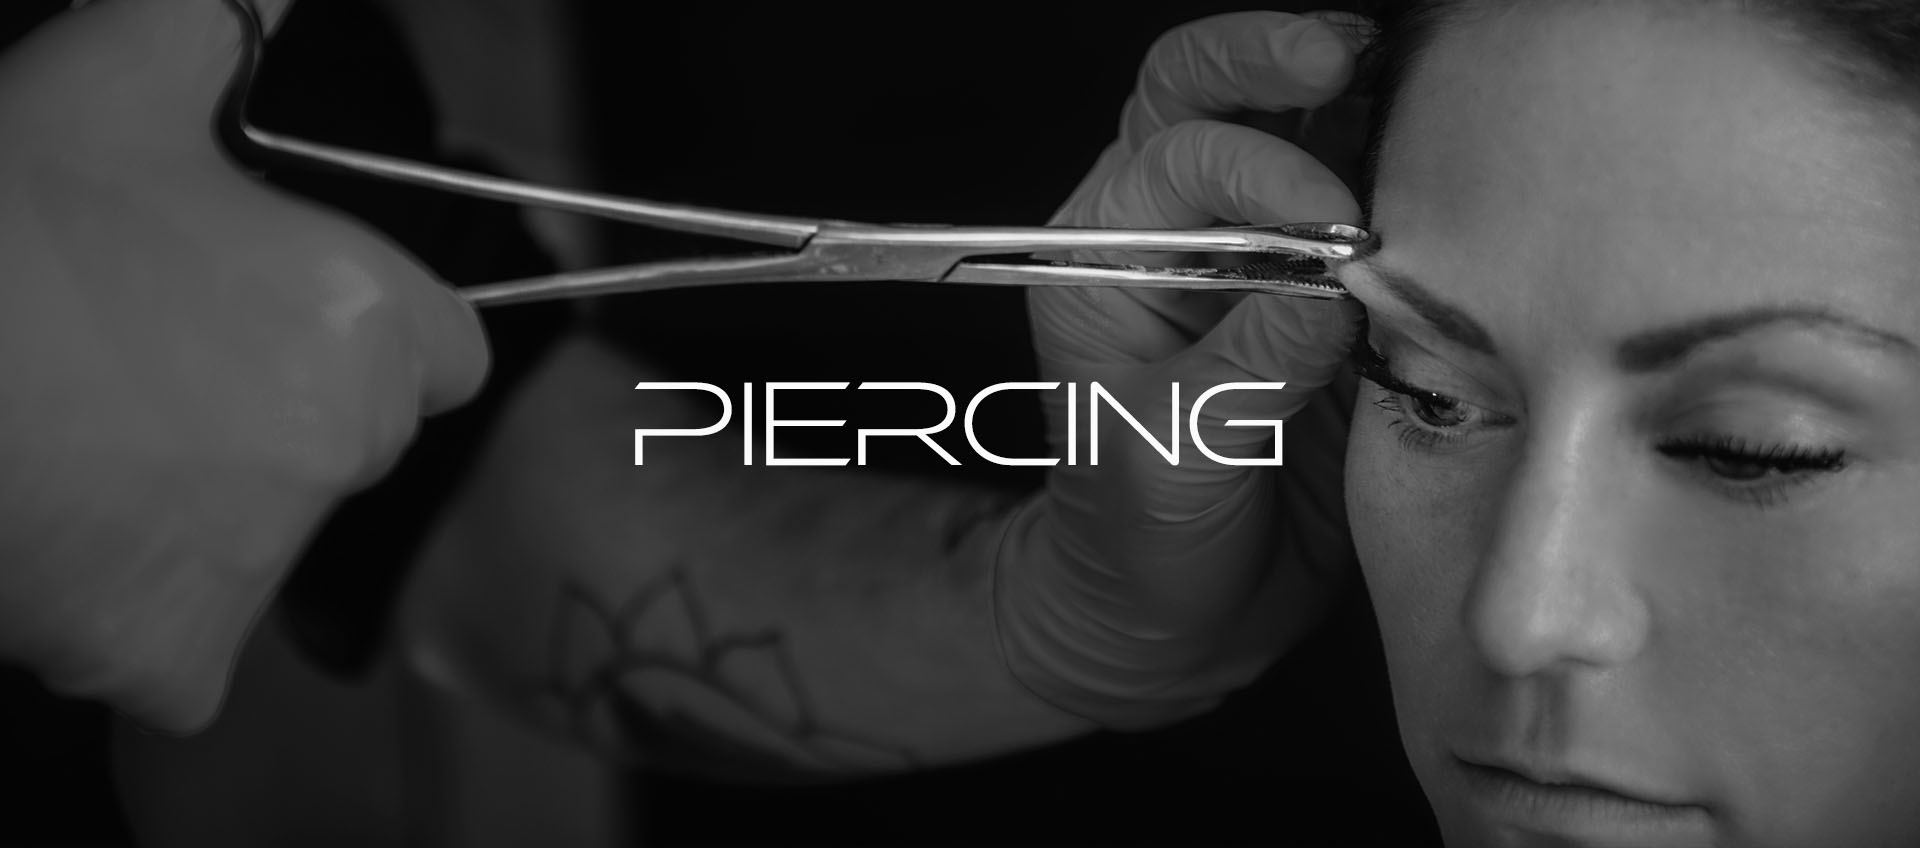 piercing_